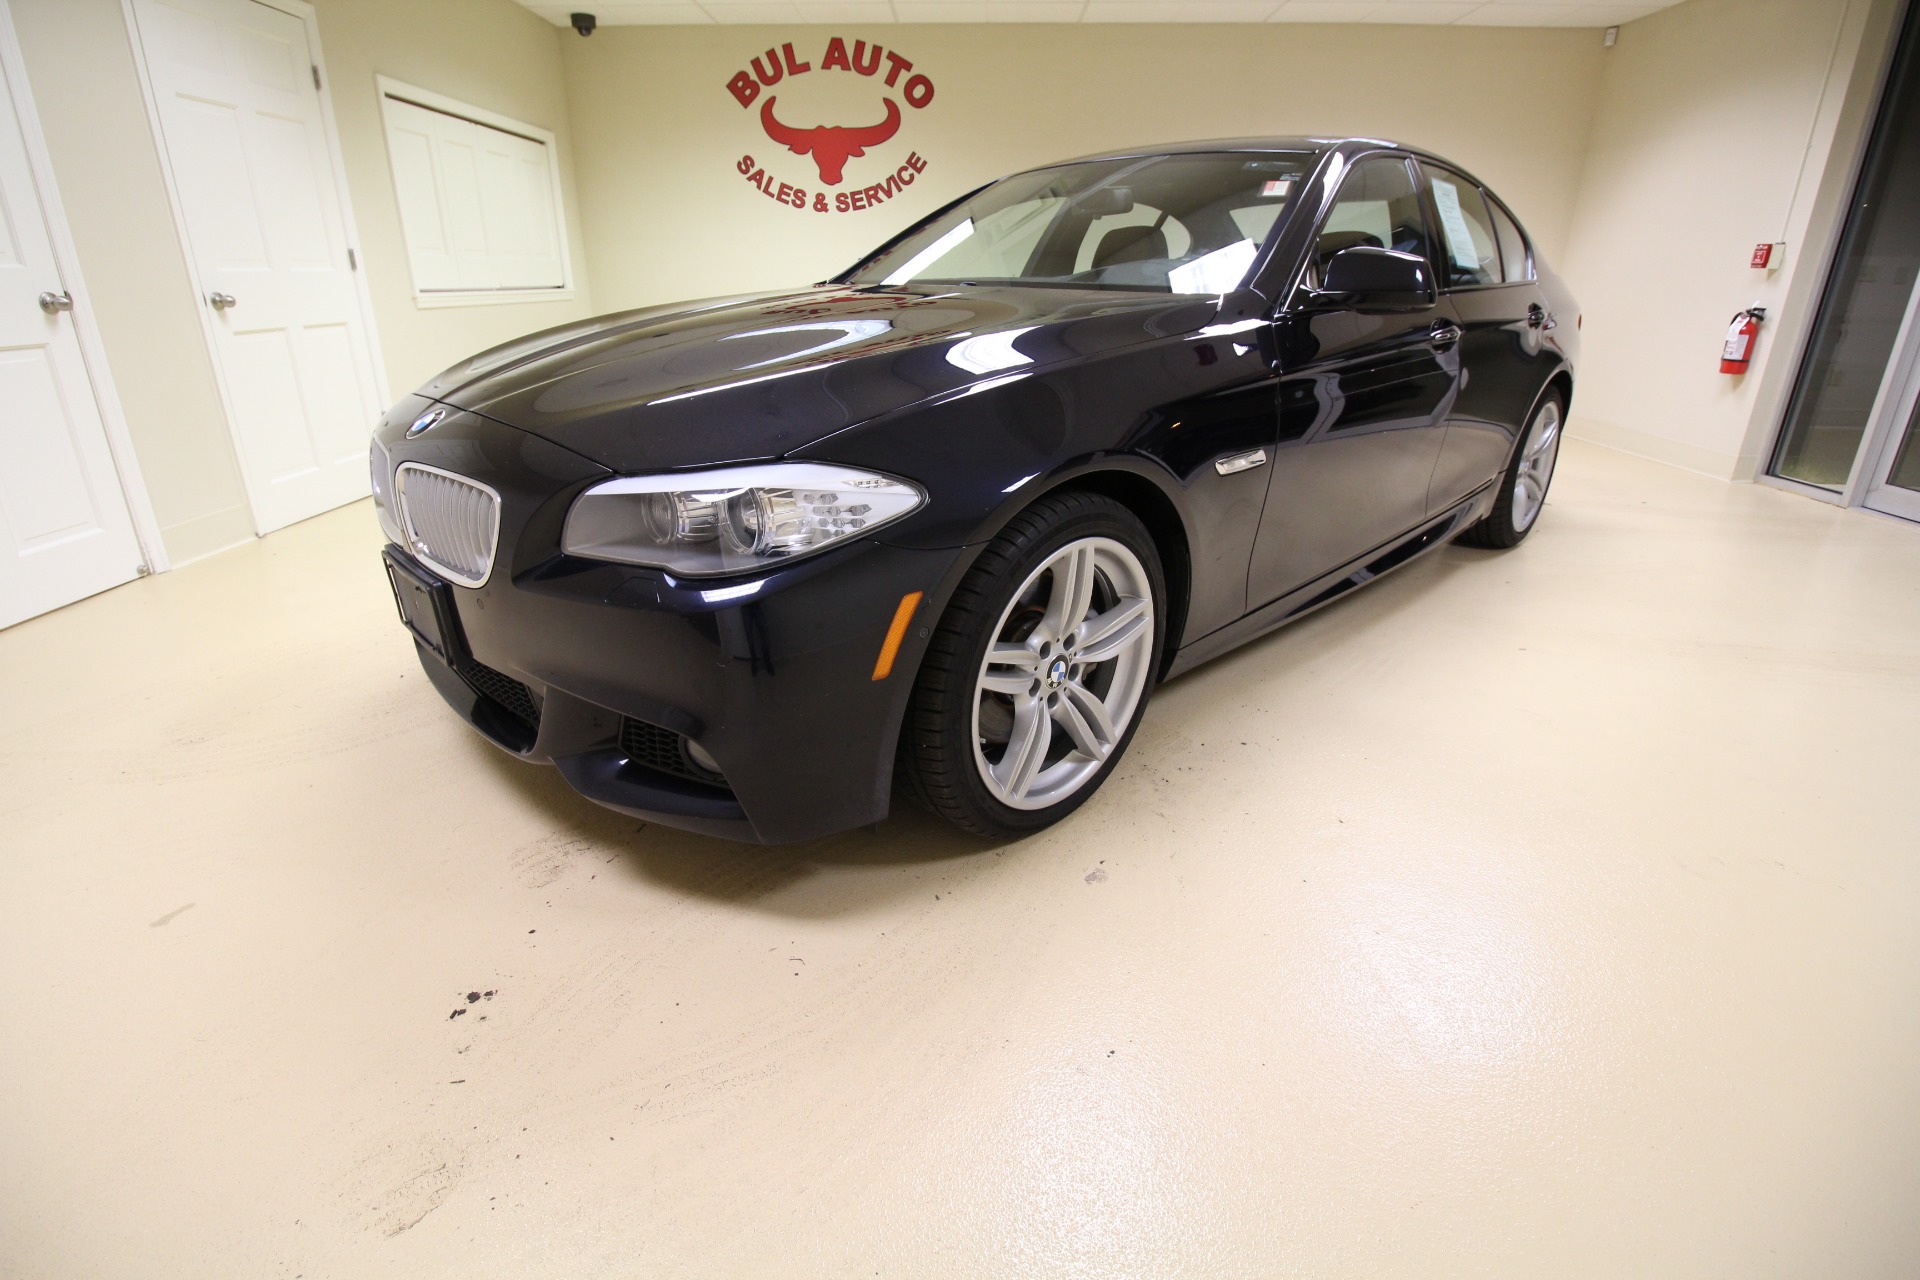 2013 BMW 5-Series For Sale $27990 | 18262 Bul Auto NY